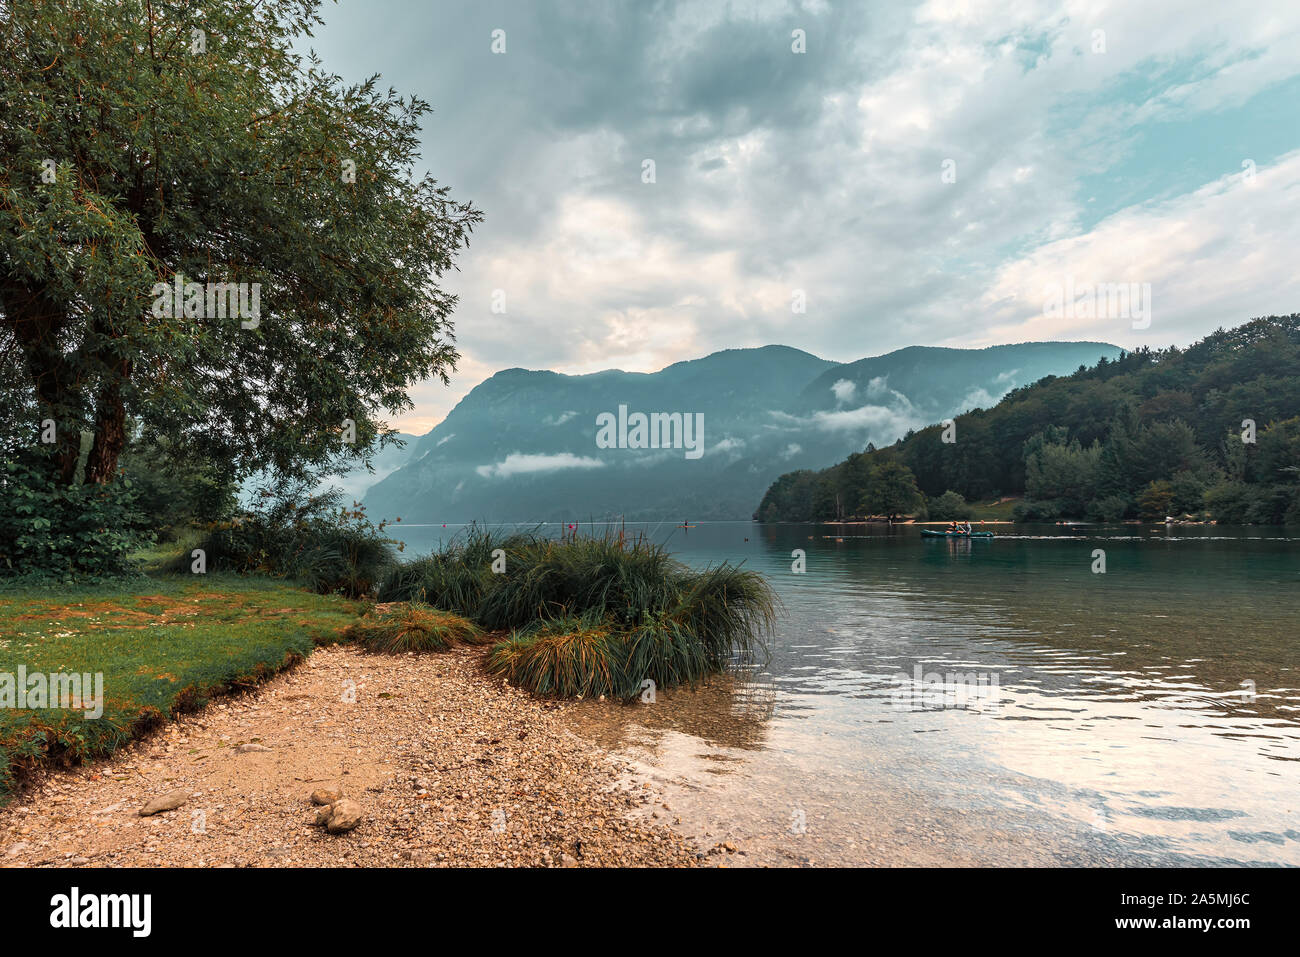 Overcast afternoon on Lake Bohinj, Slovenia. People enjoying outdoor water sport activities in bad weather Stock Photo